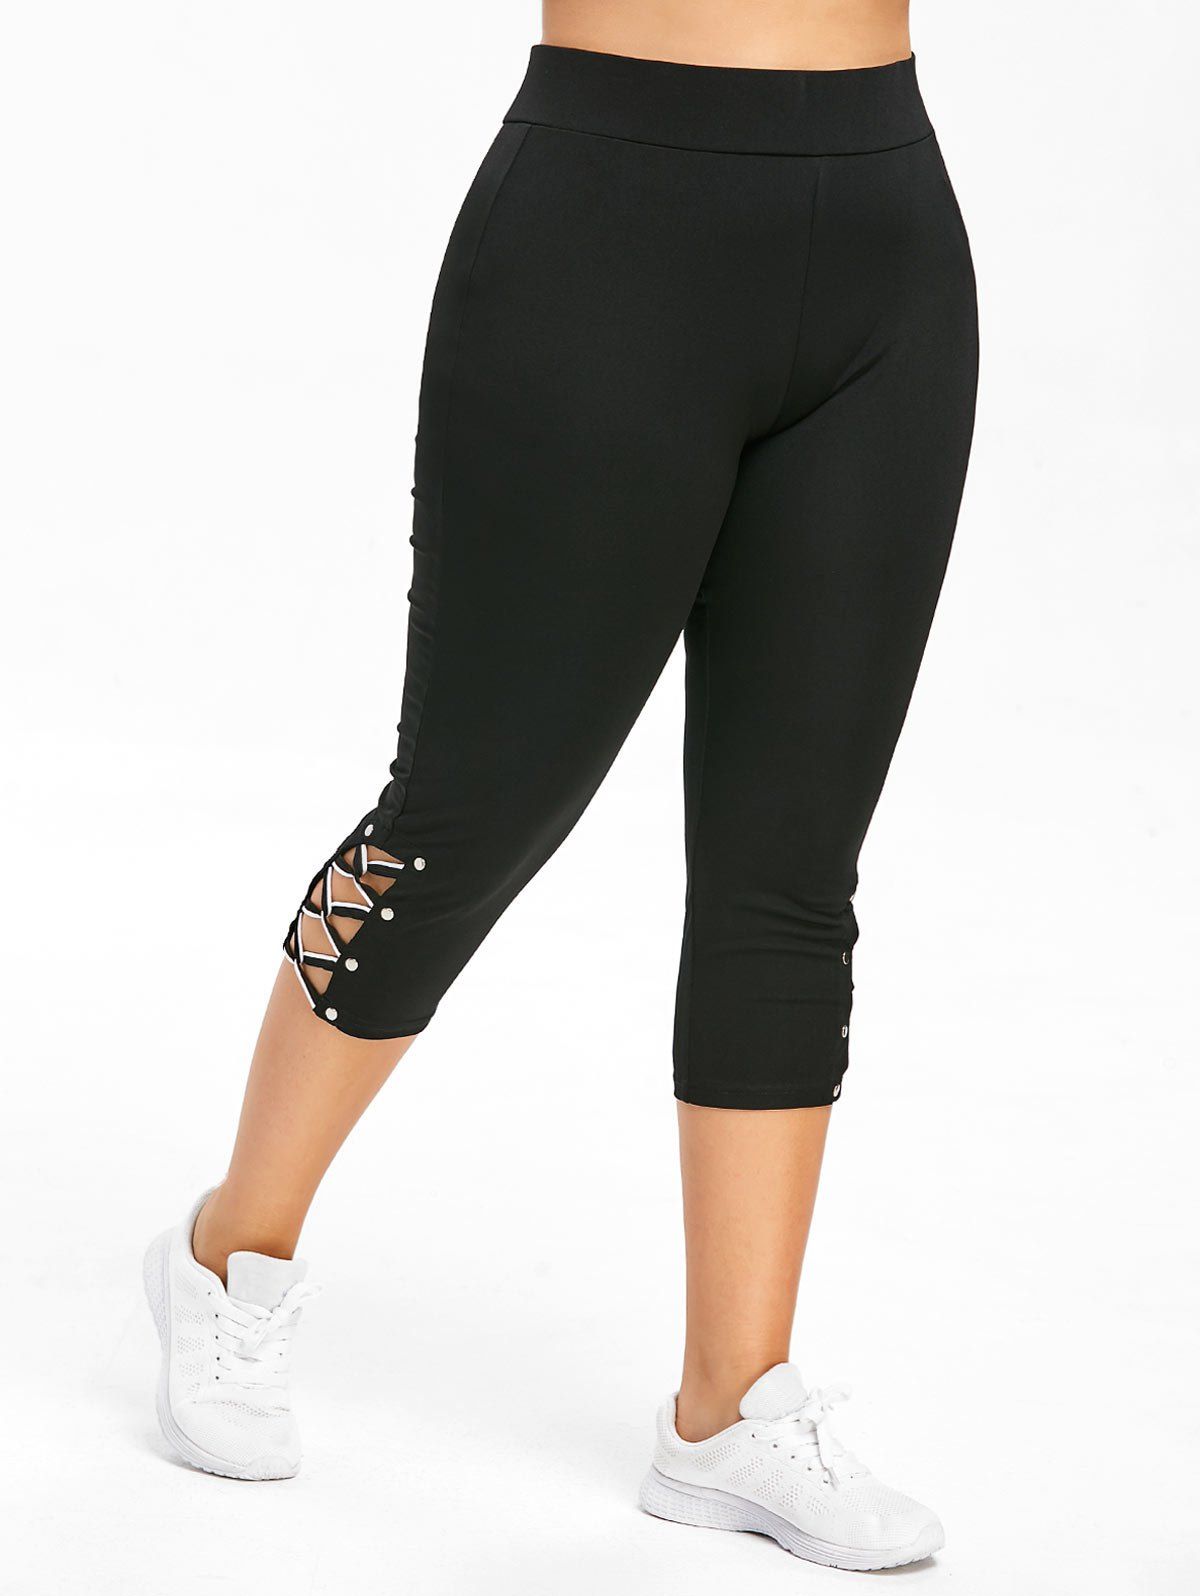 MOREFEEL Plus Size Leggings for Women-Stretchy X-Large-4X Tummy Control  High Waist Spandex Workout Black Yoga Pants